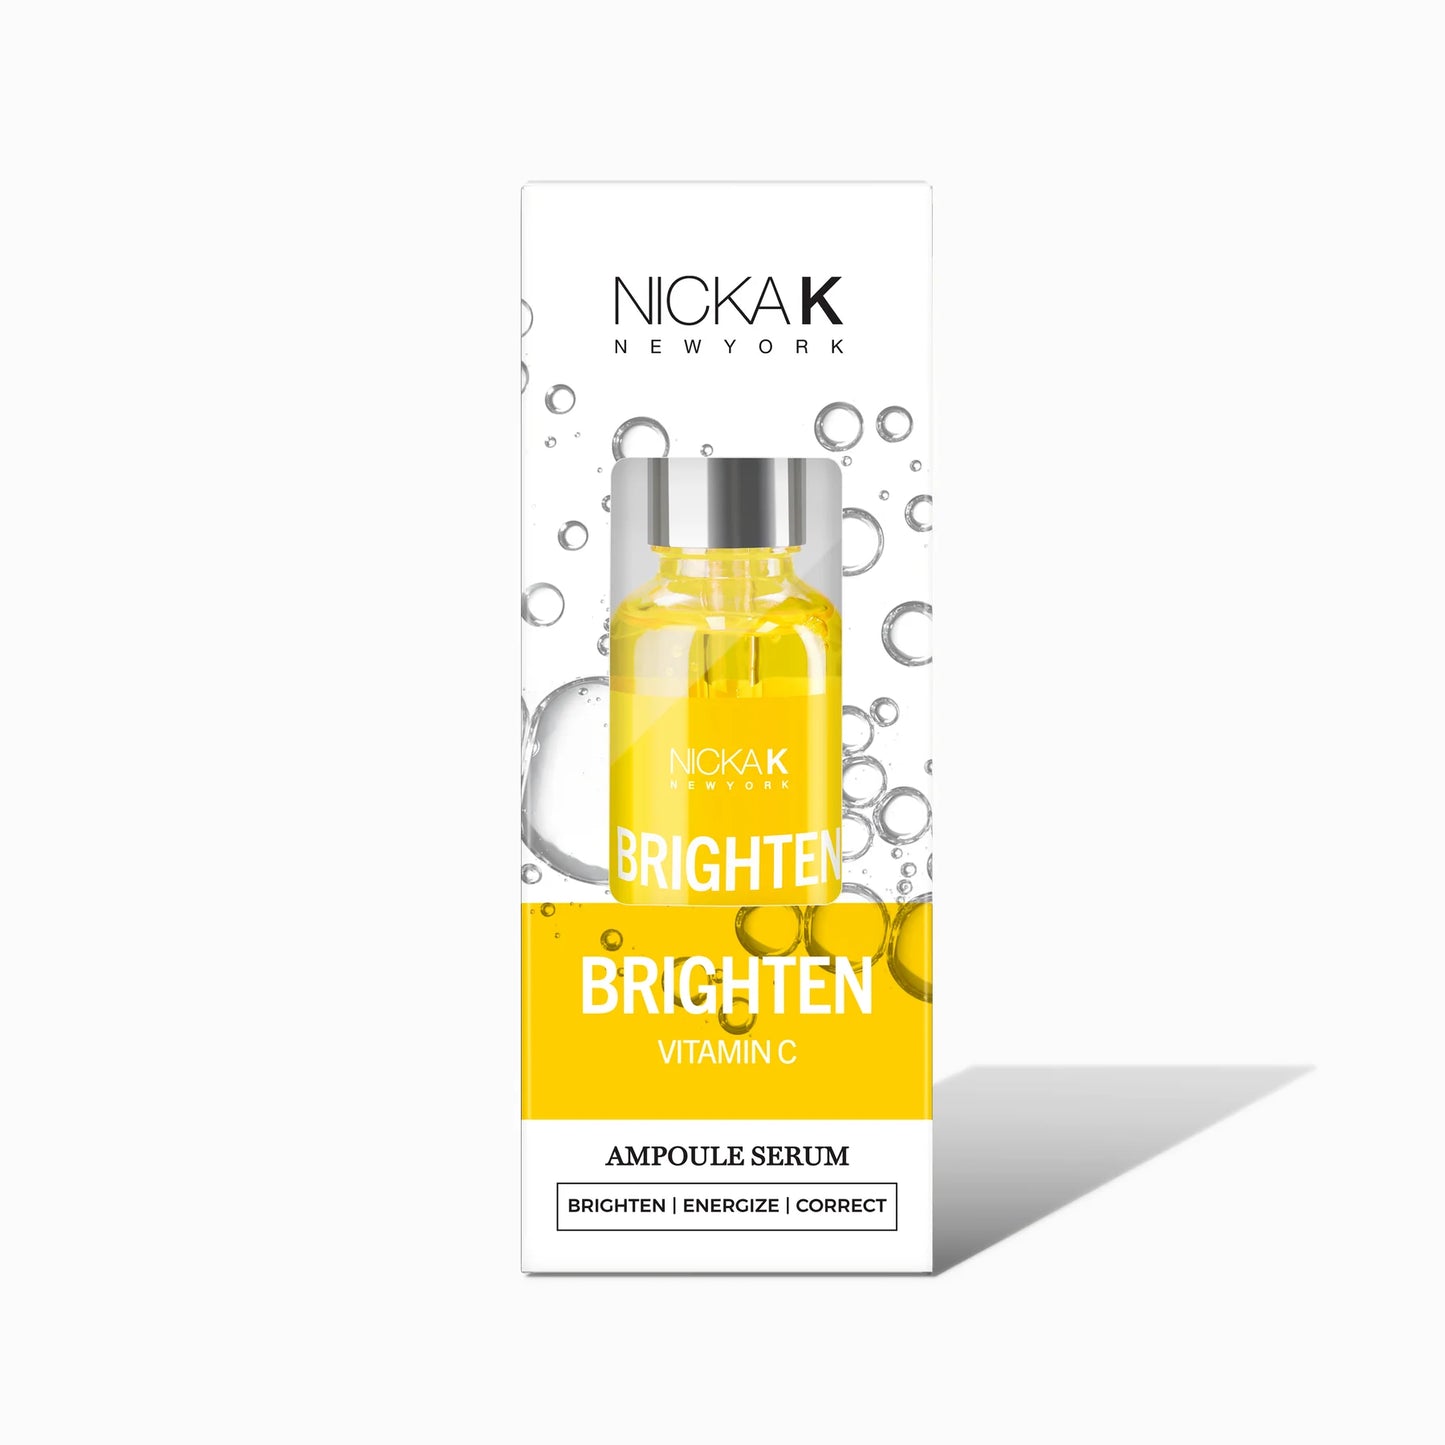 Nicka K Brighten Vitamin C Ampoule Serum - 1oz